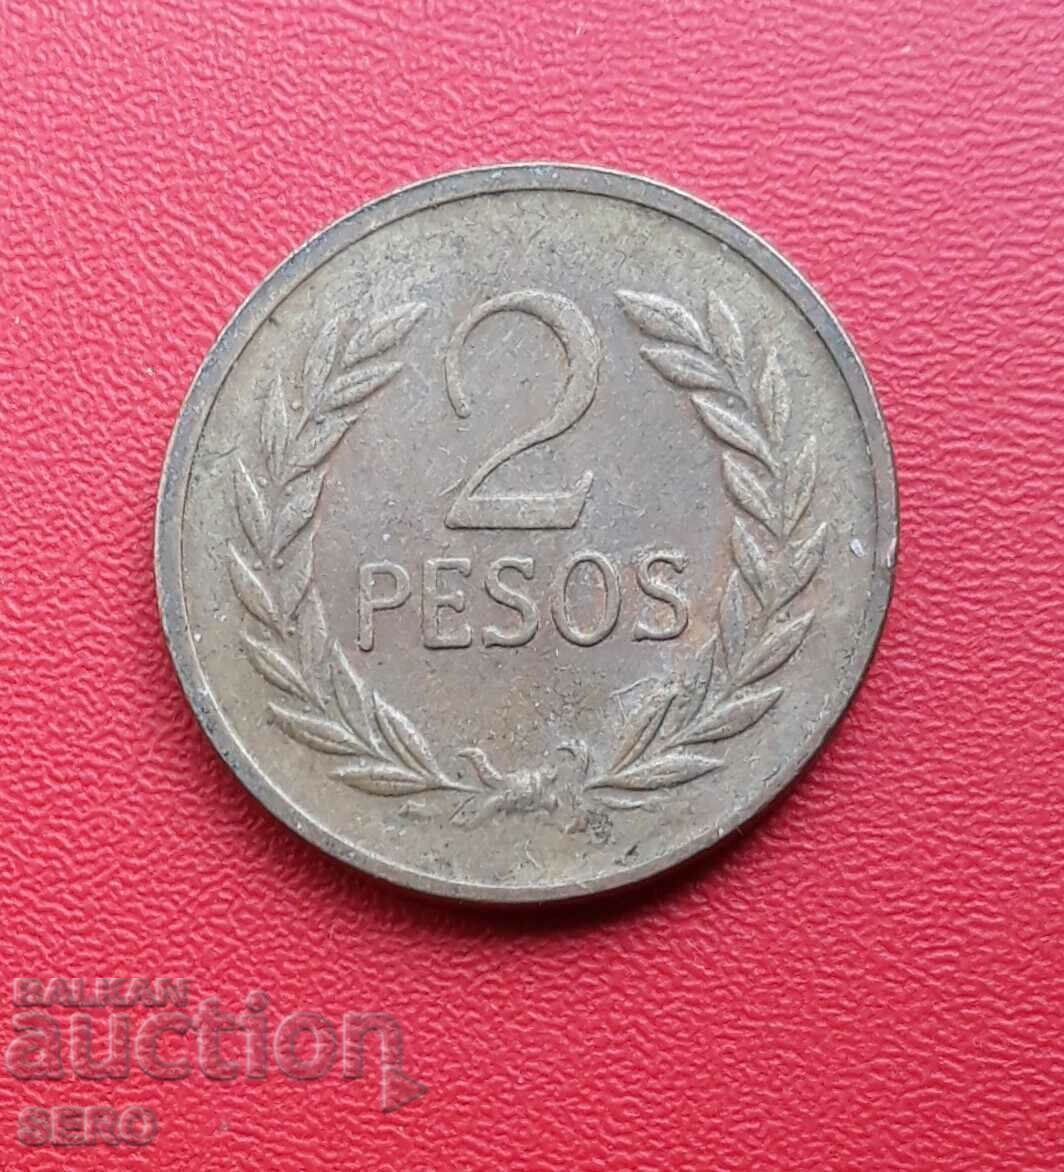 Colombia-2 pesos 1977